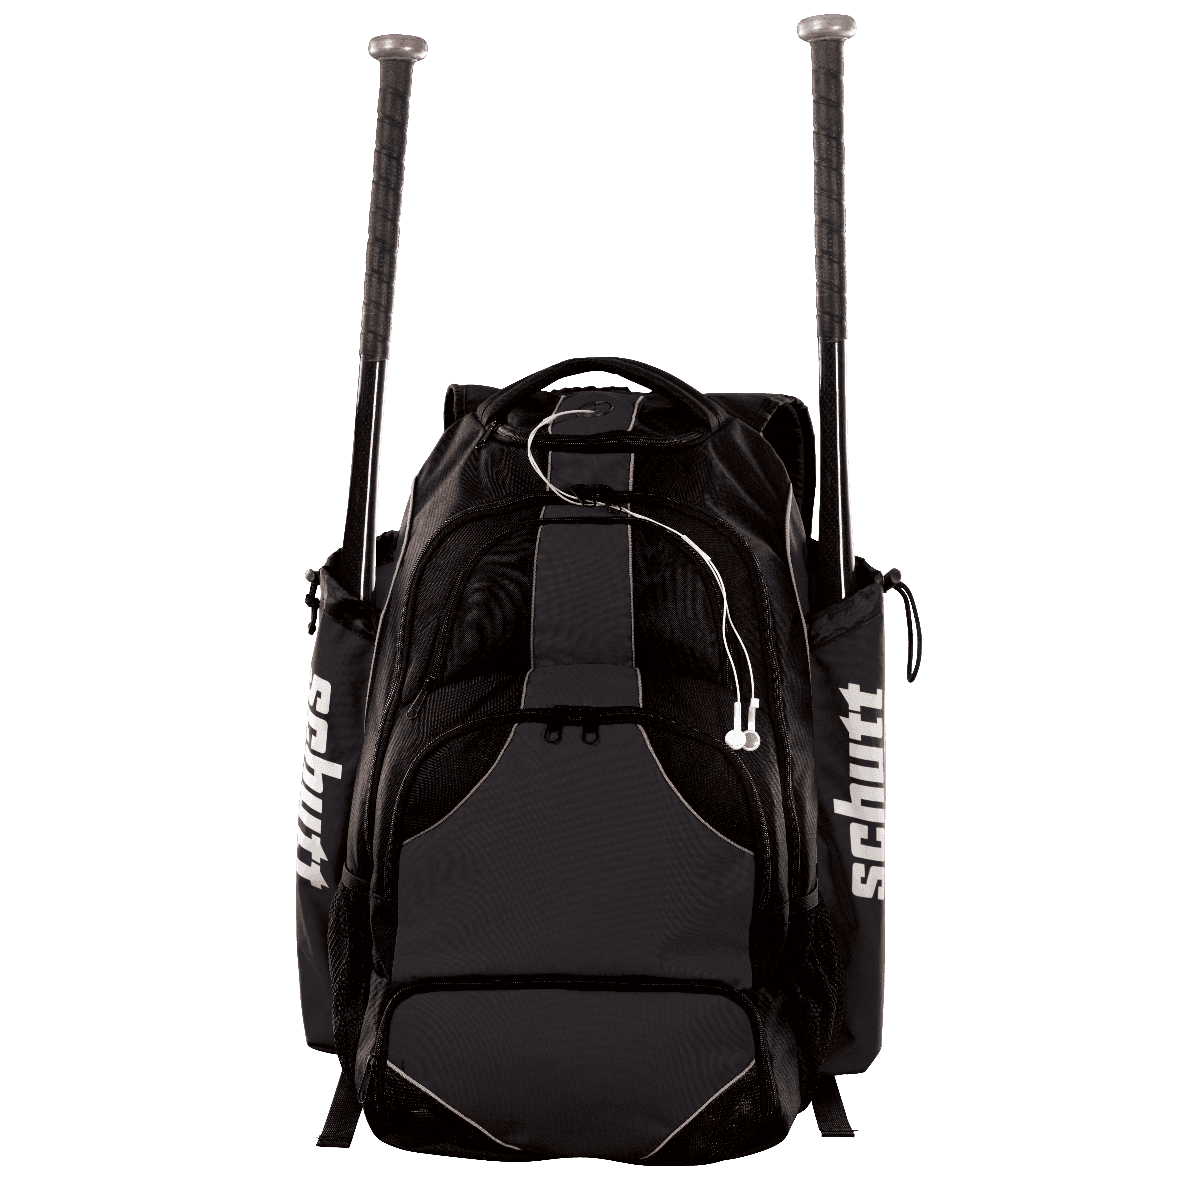 Schutt Large Travel Bat Pack Backpack Bat/Equipment Bag 12842806 